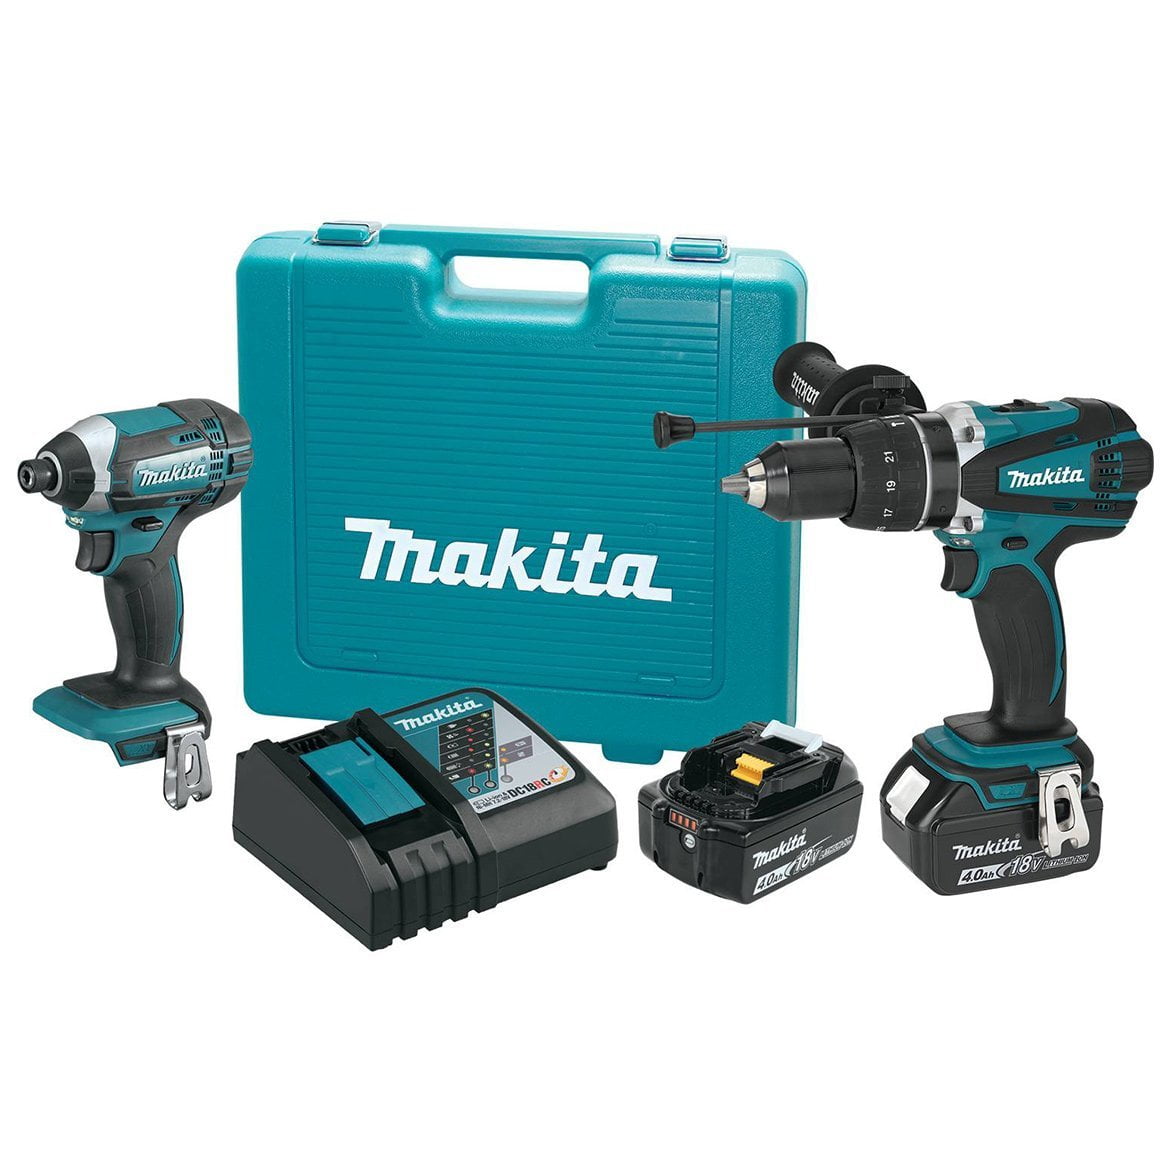 Makita 18V LXT Cordless Brushed 2 Tool Hammer Drill and Driver Kit Walmart.com